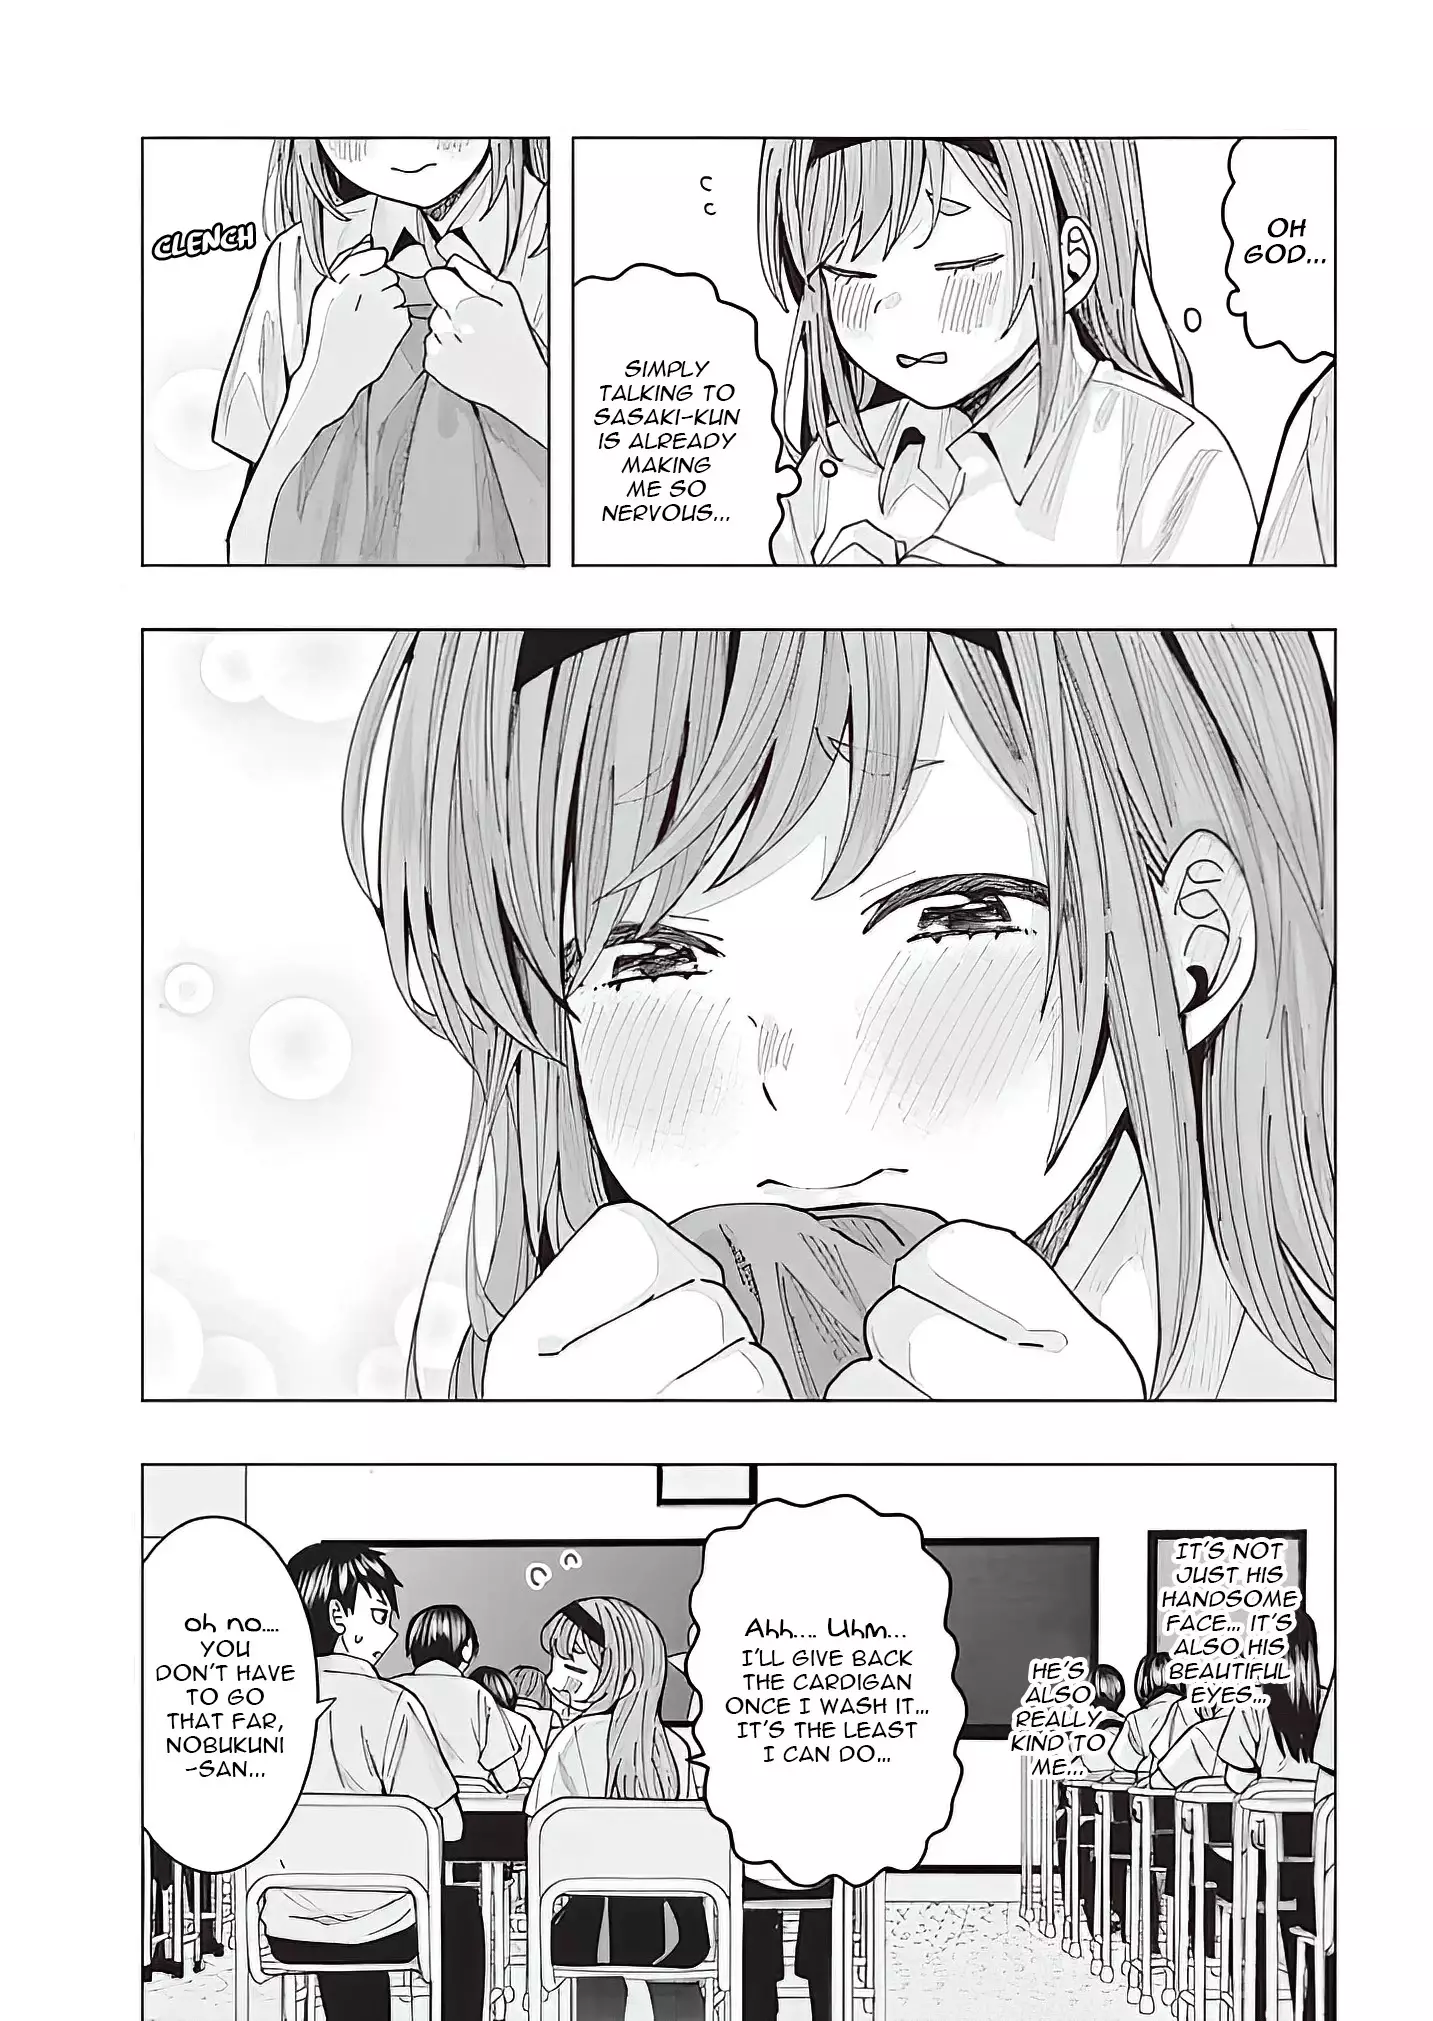 "nobukuni-San" Does She Like Me? - 2 page 14